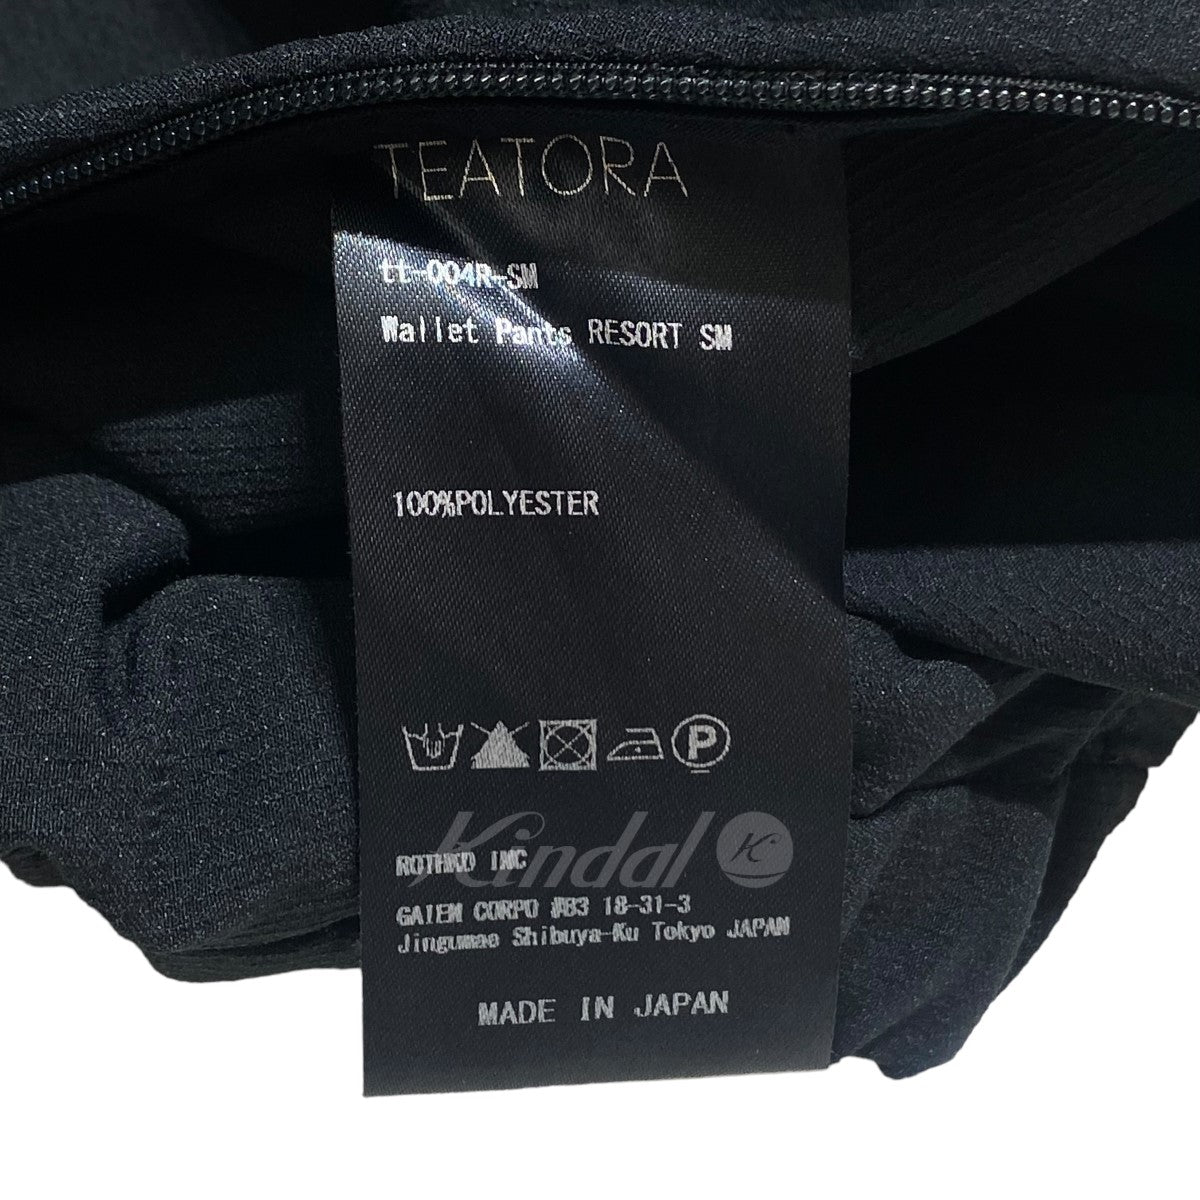 TEATORA(テアトラ) Wallet Pants RESORT SM イージーパンツ／tt 004R ...